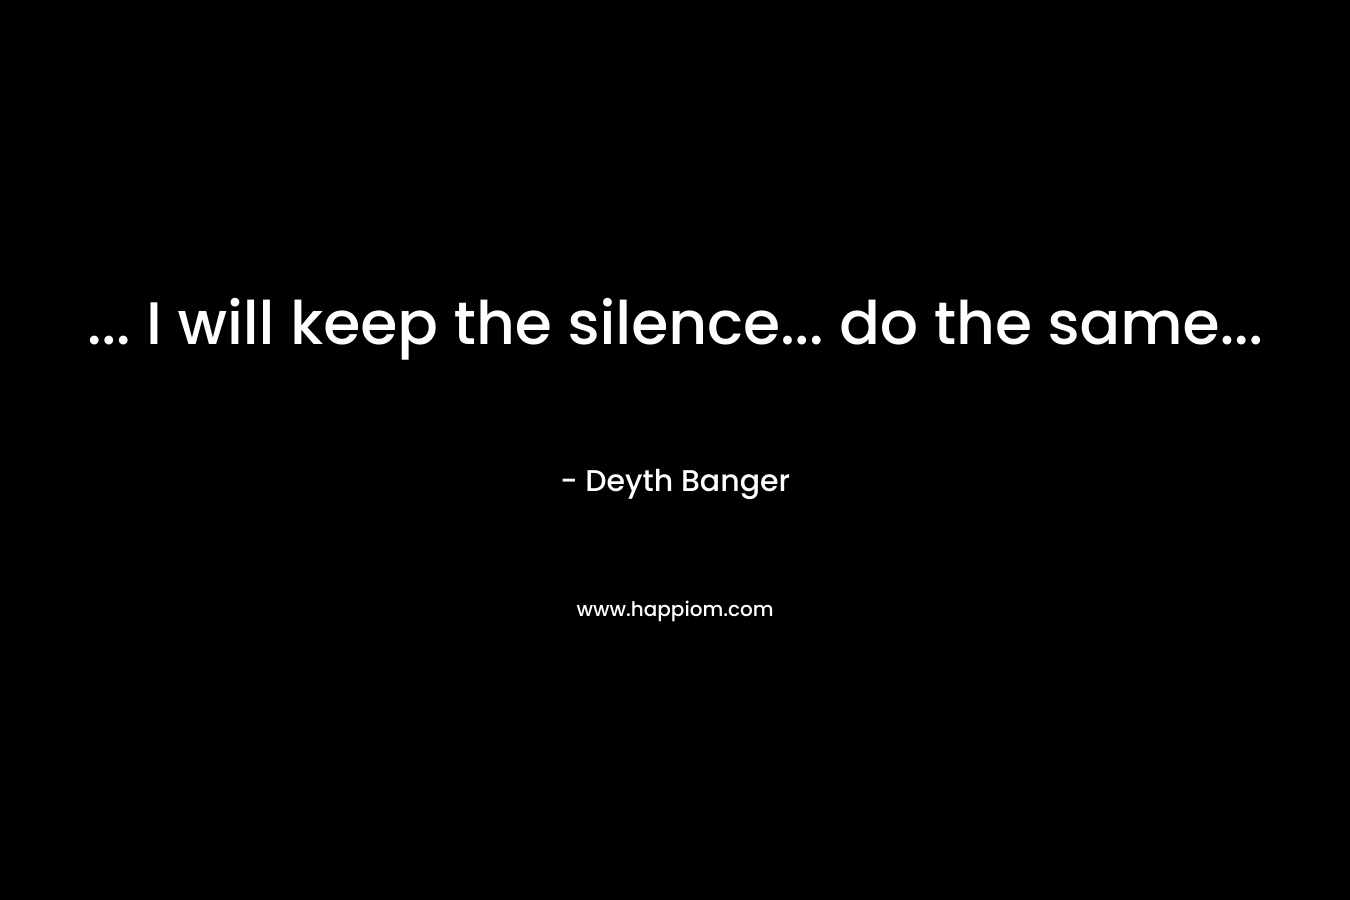 ... I will keep the silence... do the same...